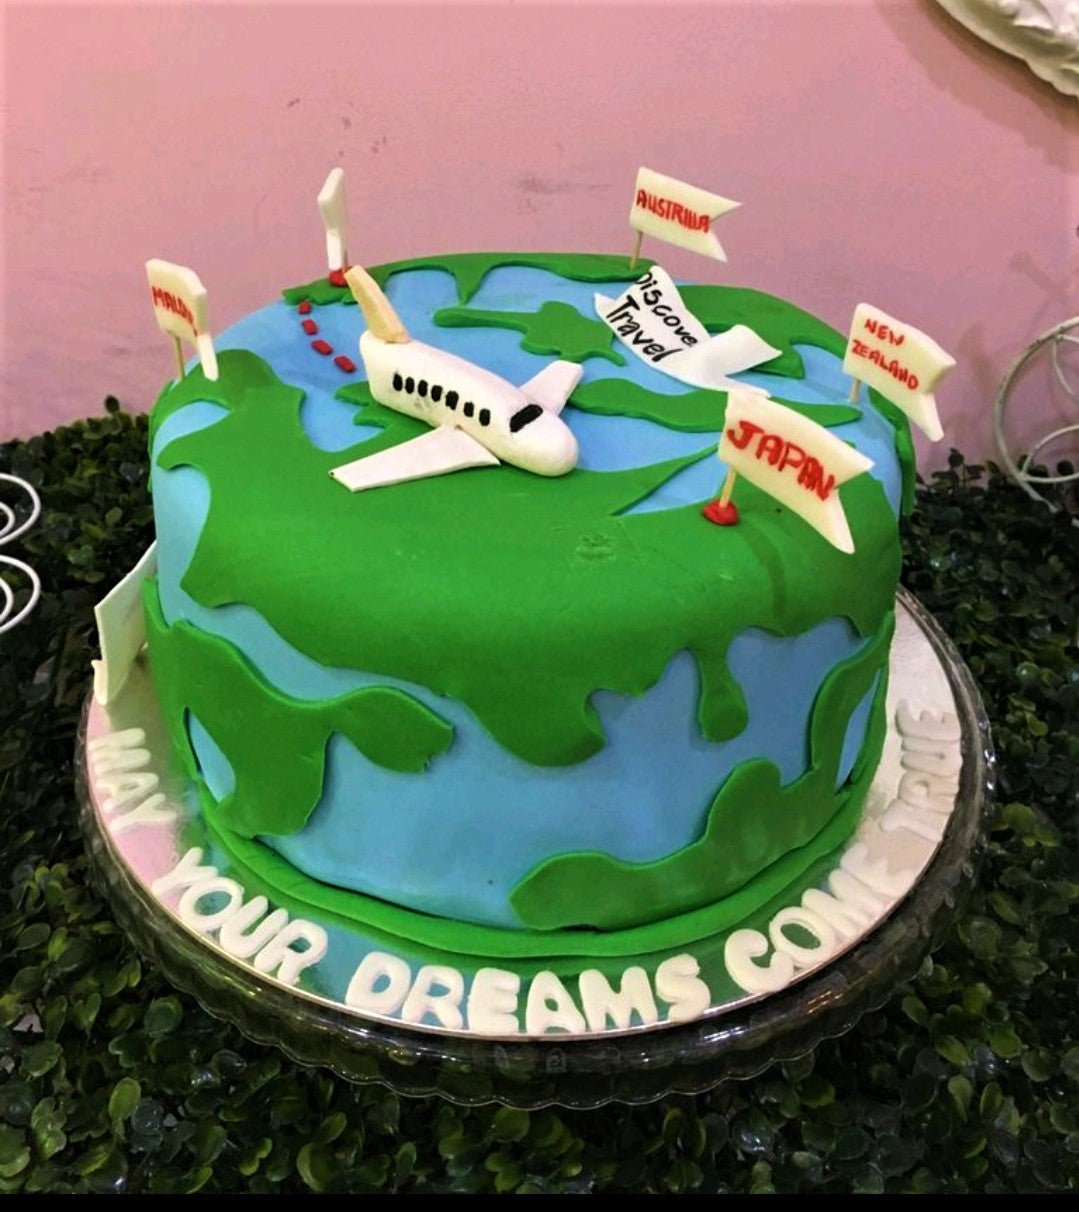 INDIA TO CANADA PLANE CAKE - Rashmi's Bakery